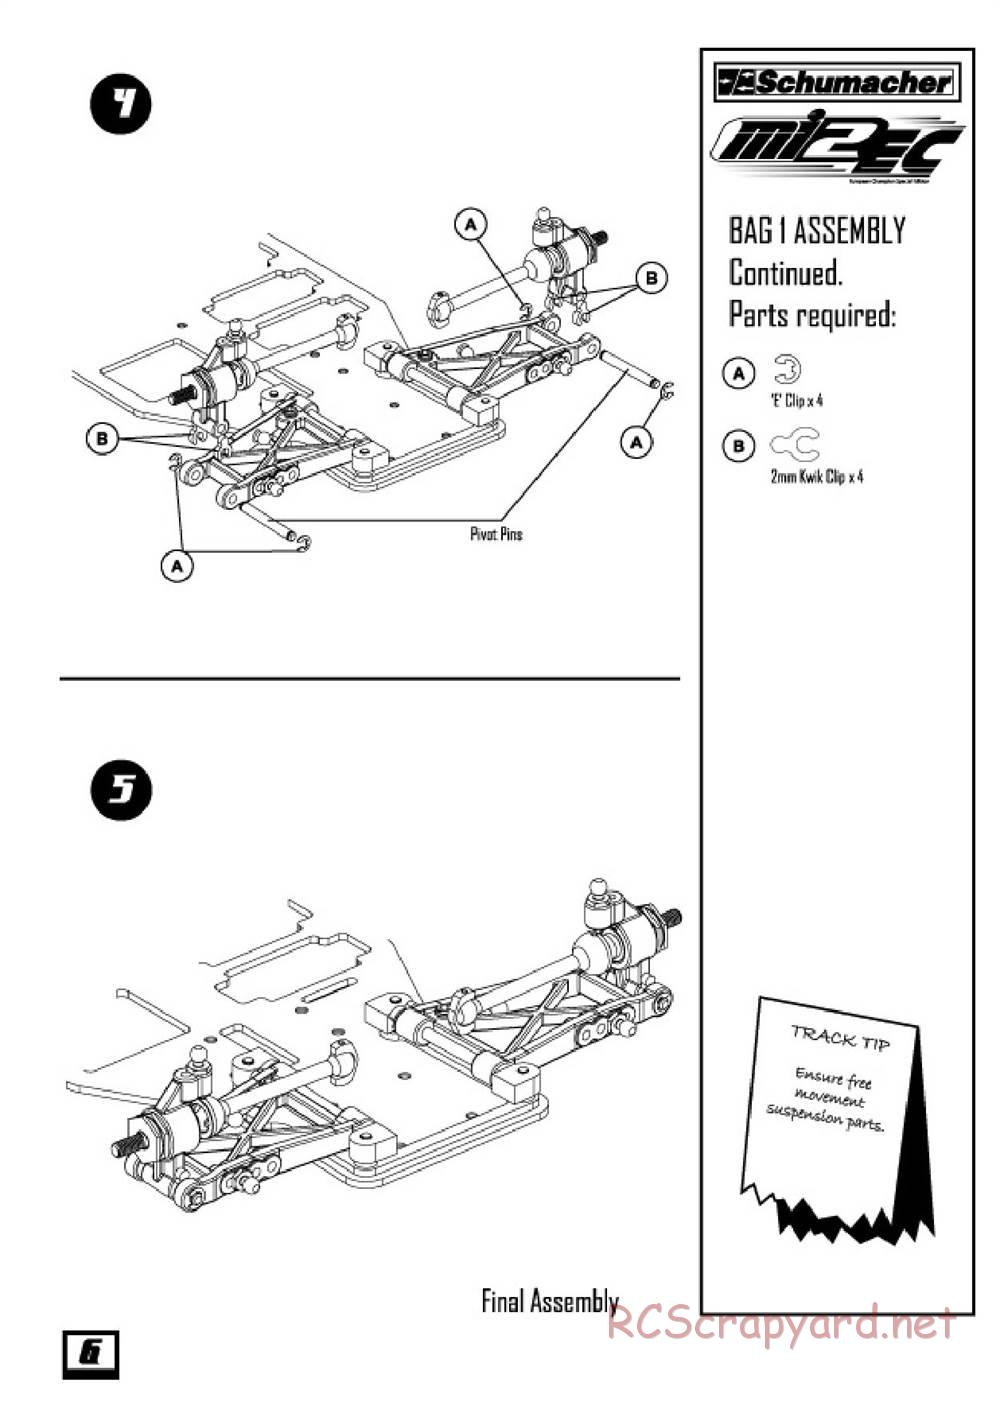 Schumacher - Mi2 EC - Manual - Page 8